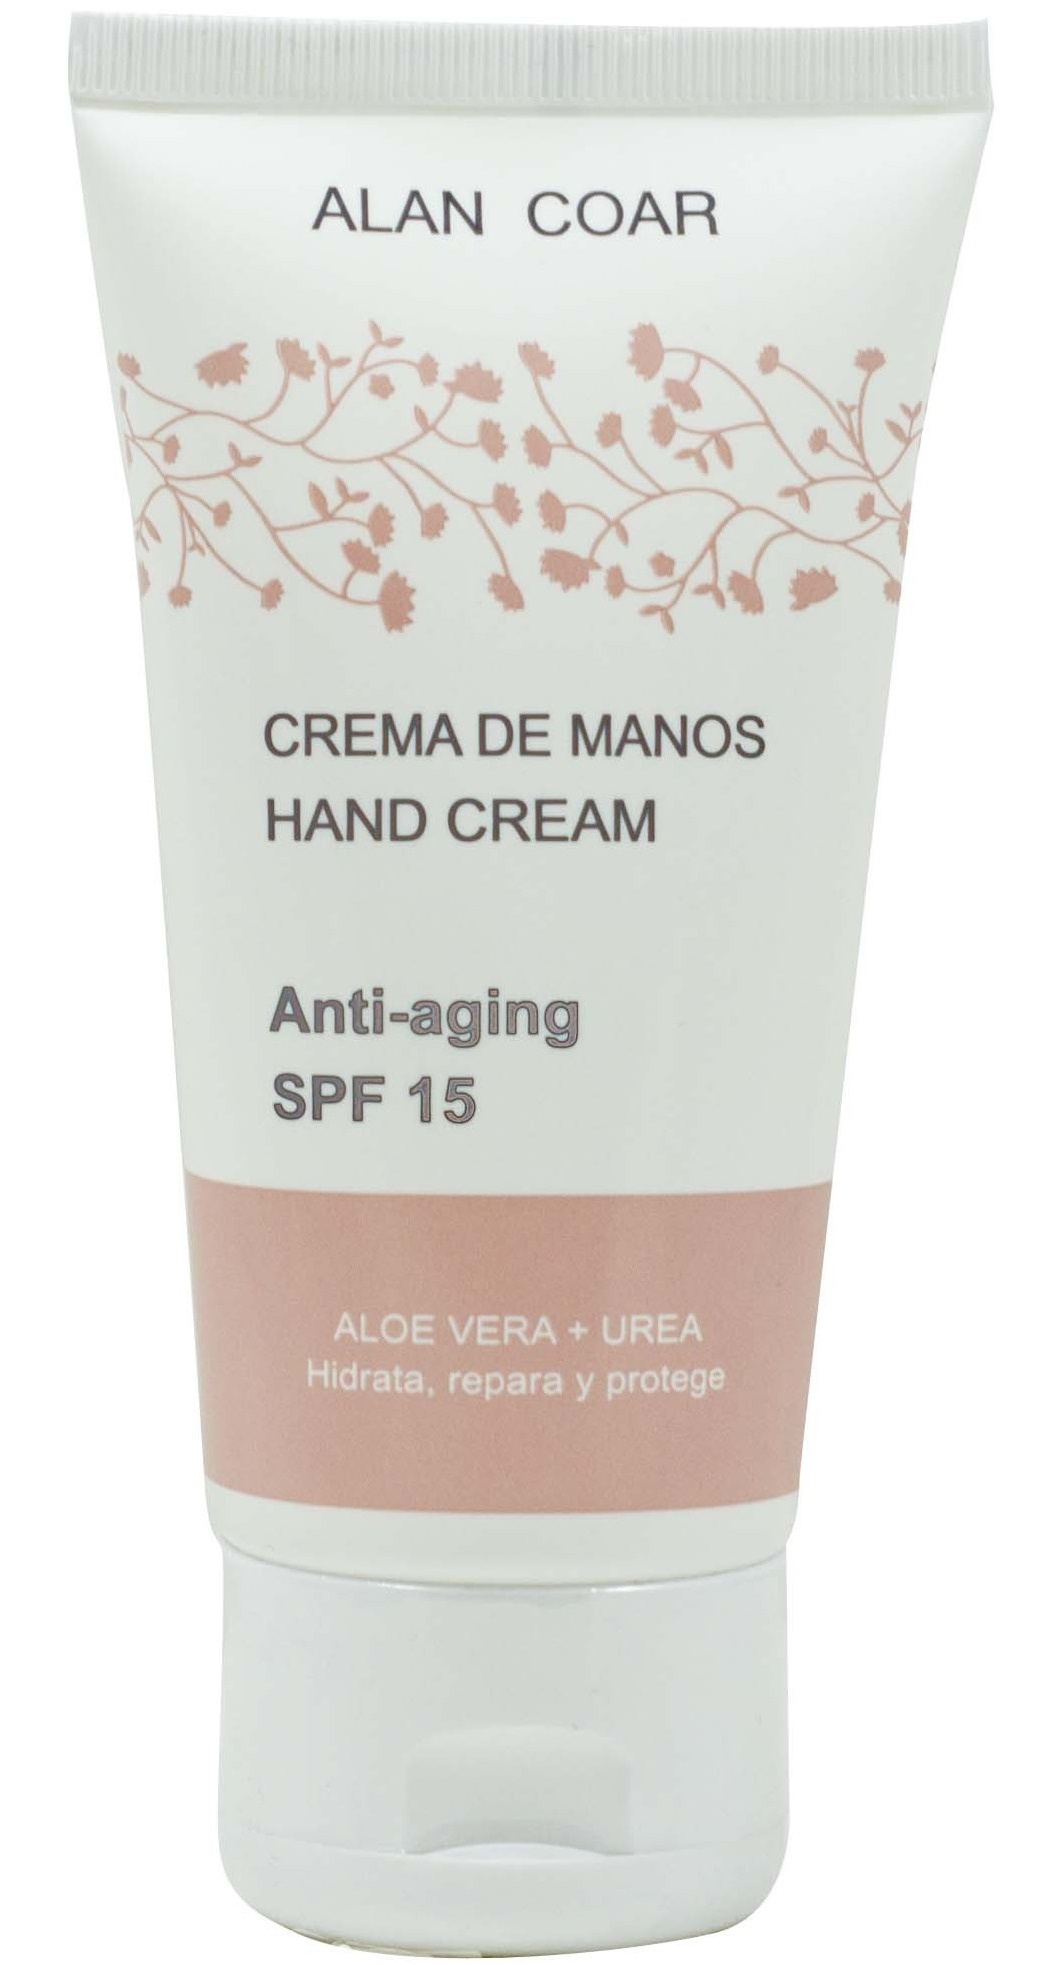 Alan Coar Hand Cream Anti-aging SPF15